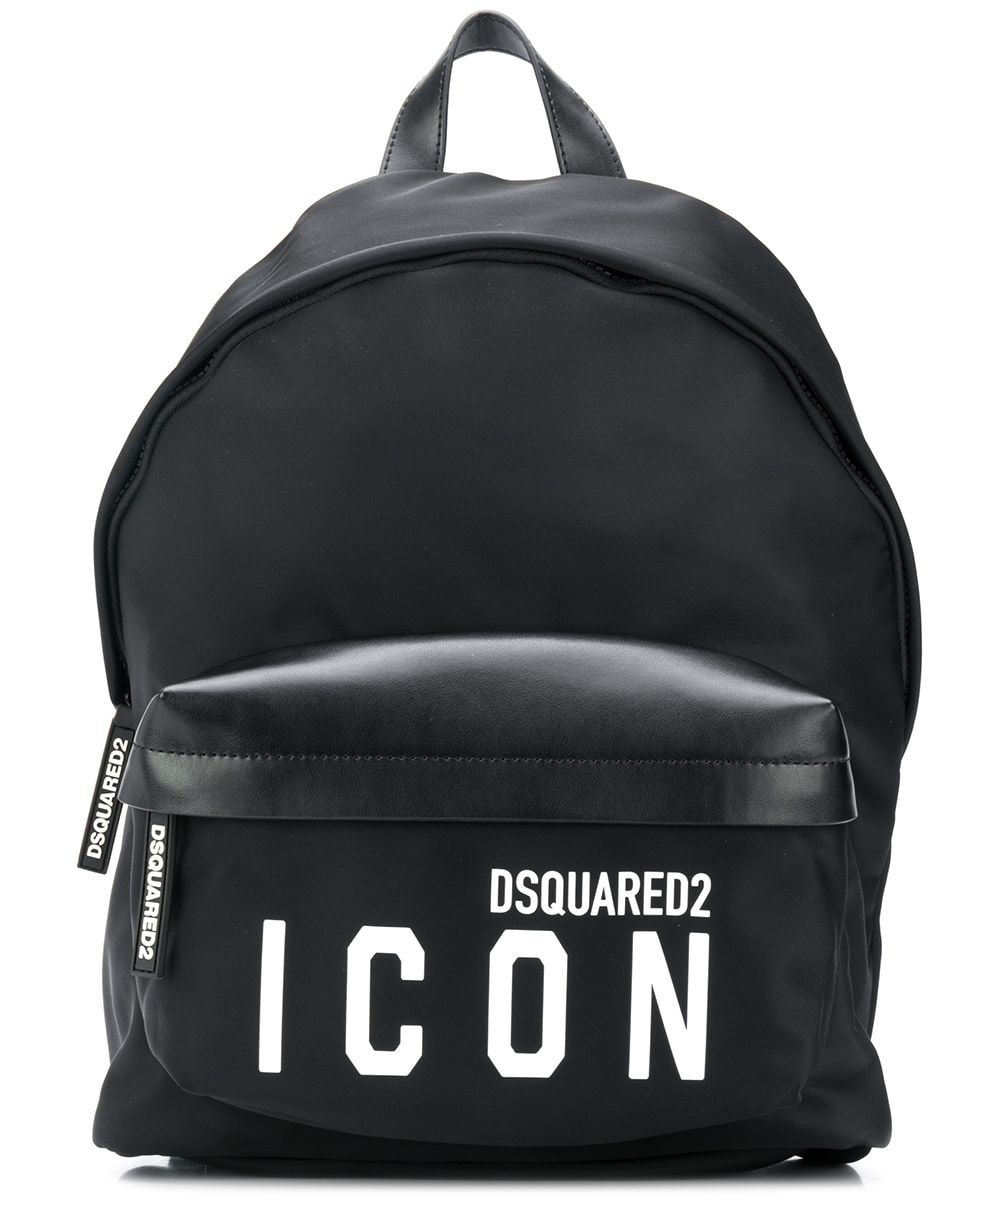 ICON Logo Backpack Bag